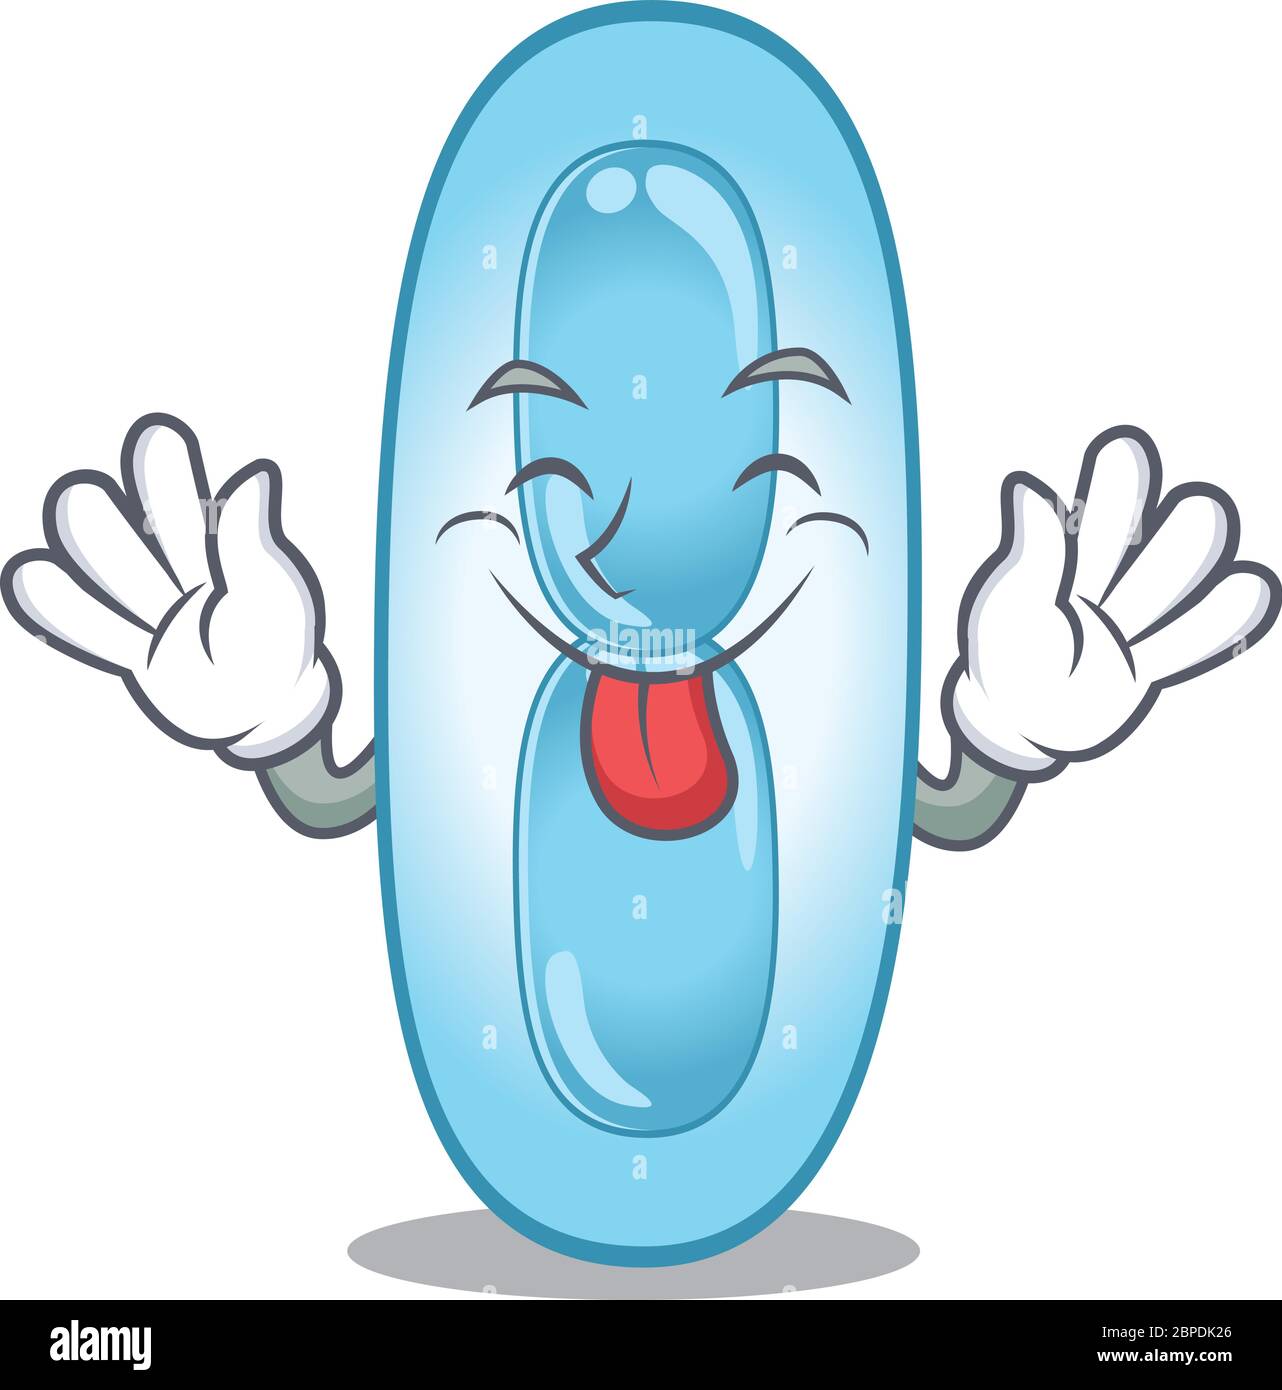 Funny klebsiella pneumoniae cartoon design with tongue out face Stock Vector